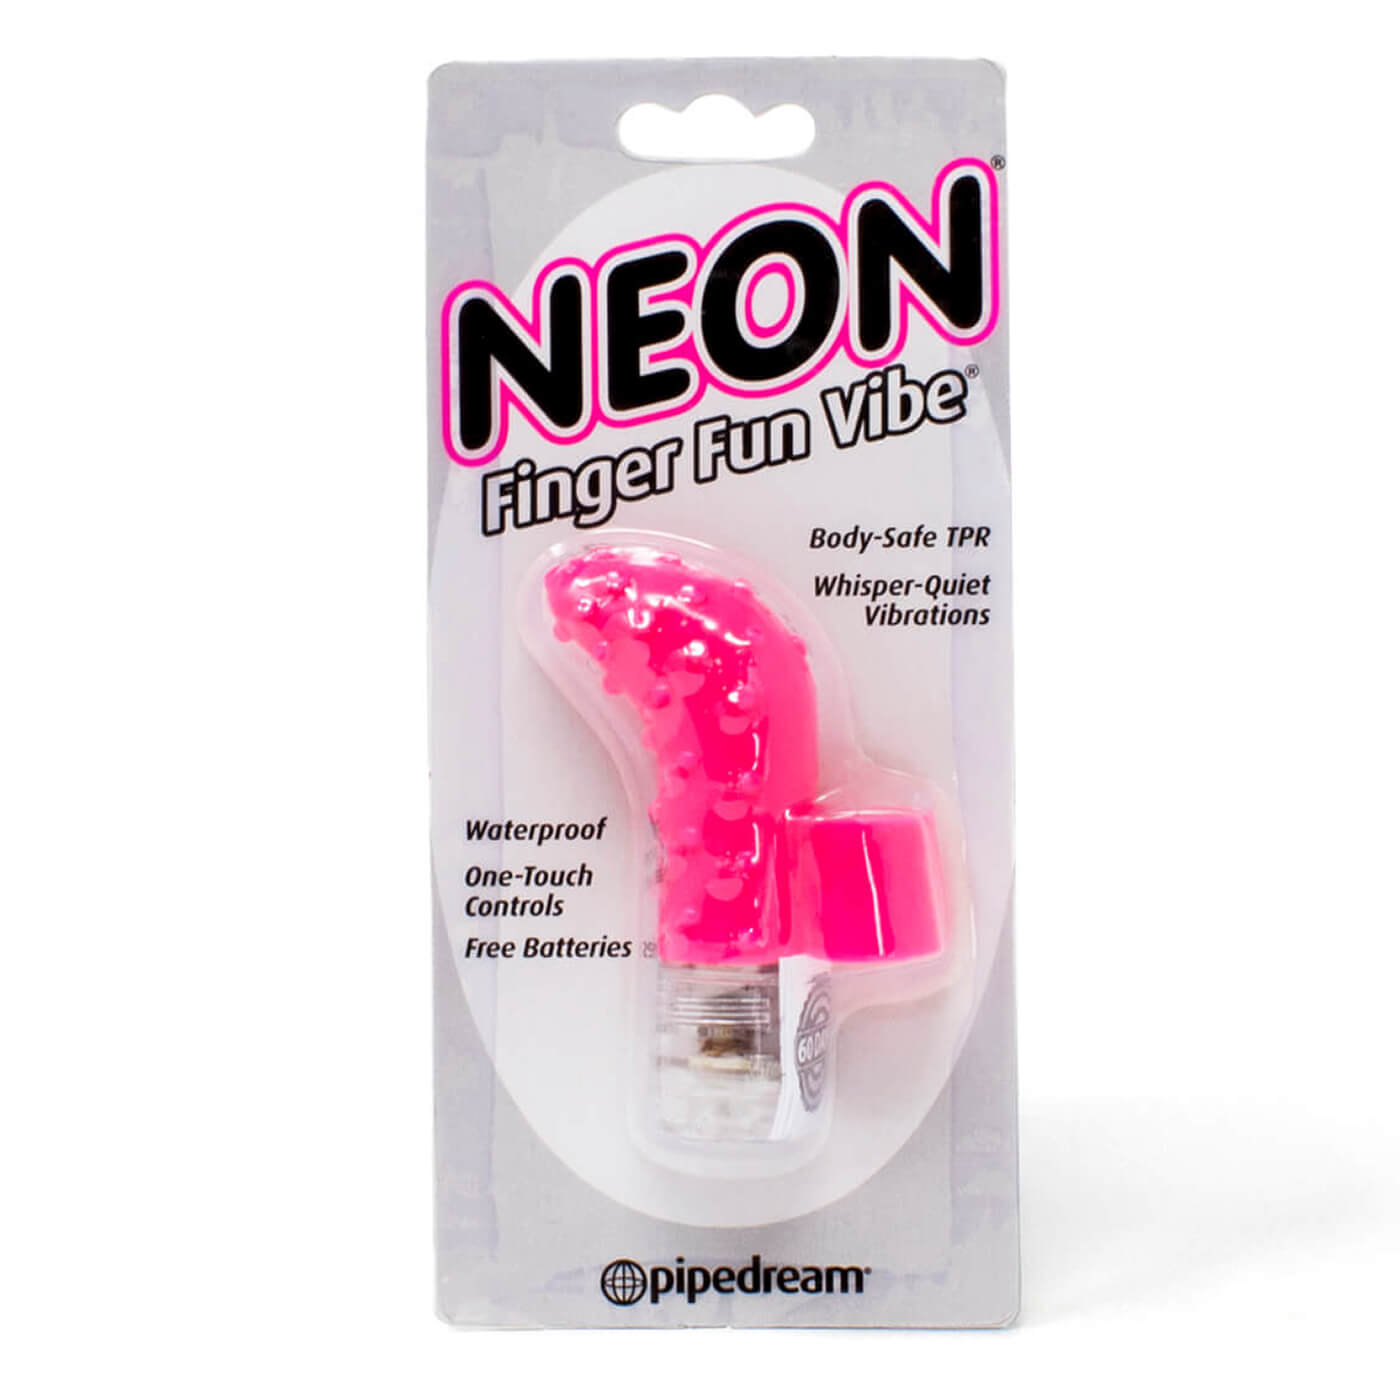 Neon Finger Fun Vibe